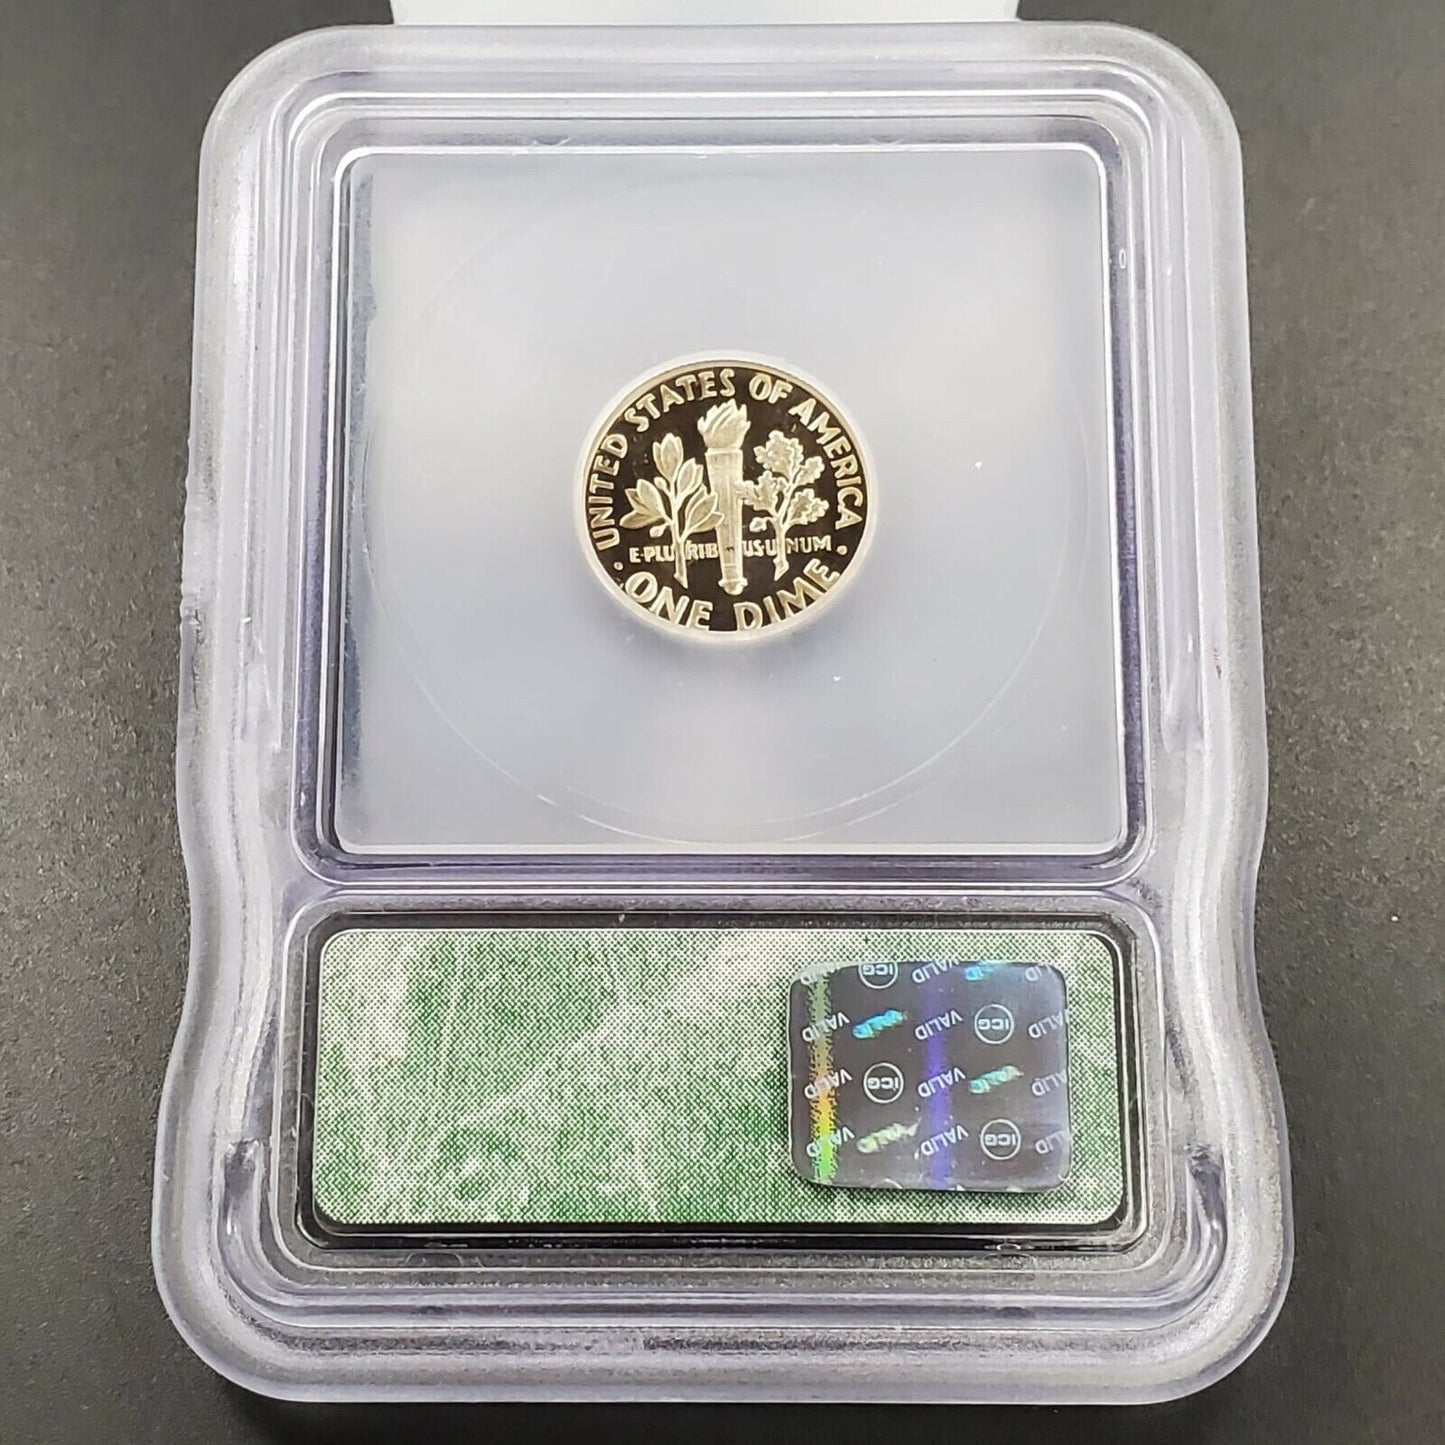 1979 S Roosevelt Type 1 Clad Dime Proof Coin Vintage ICG PR70 DCAM Deep Cameo 2